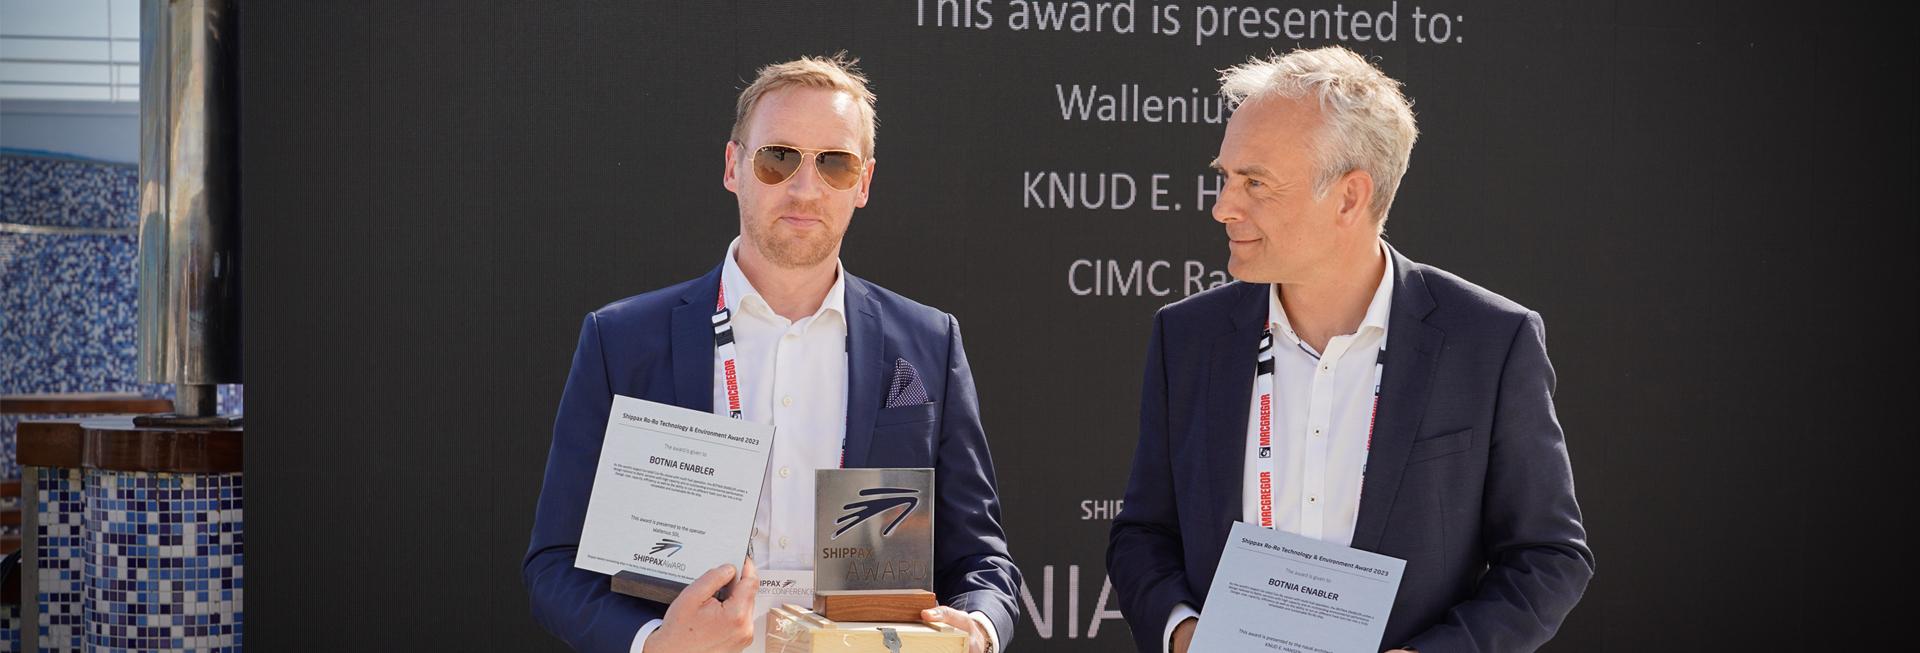 Jonas Wåhlin, WALLENIUS SOL and Christian Damsgaard, KNUD.E HANSEN at the Shippax Awards